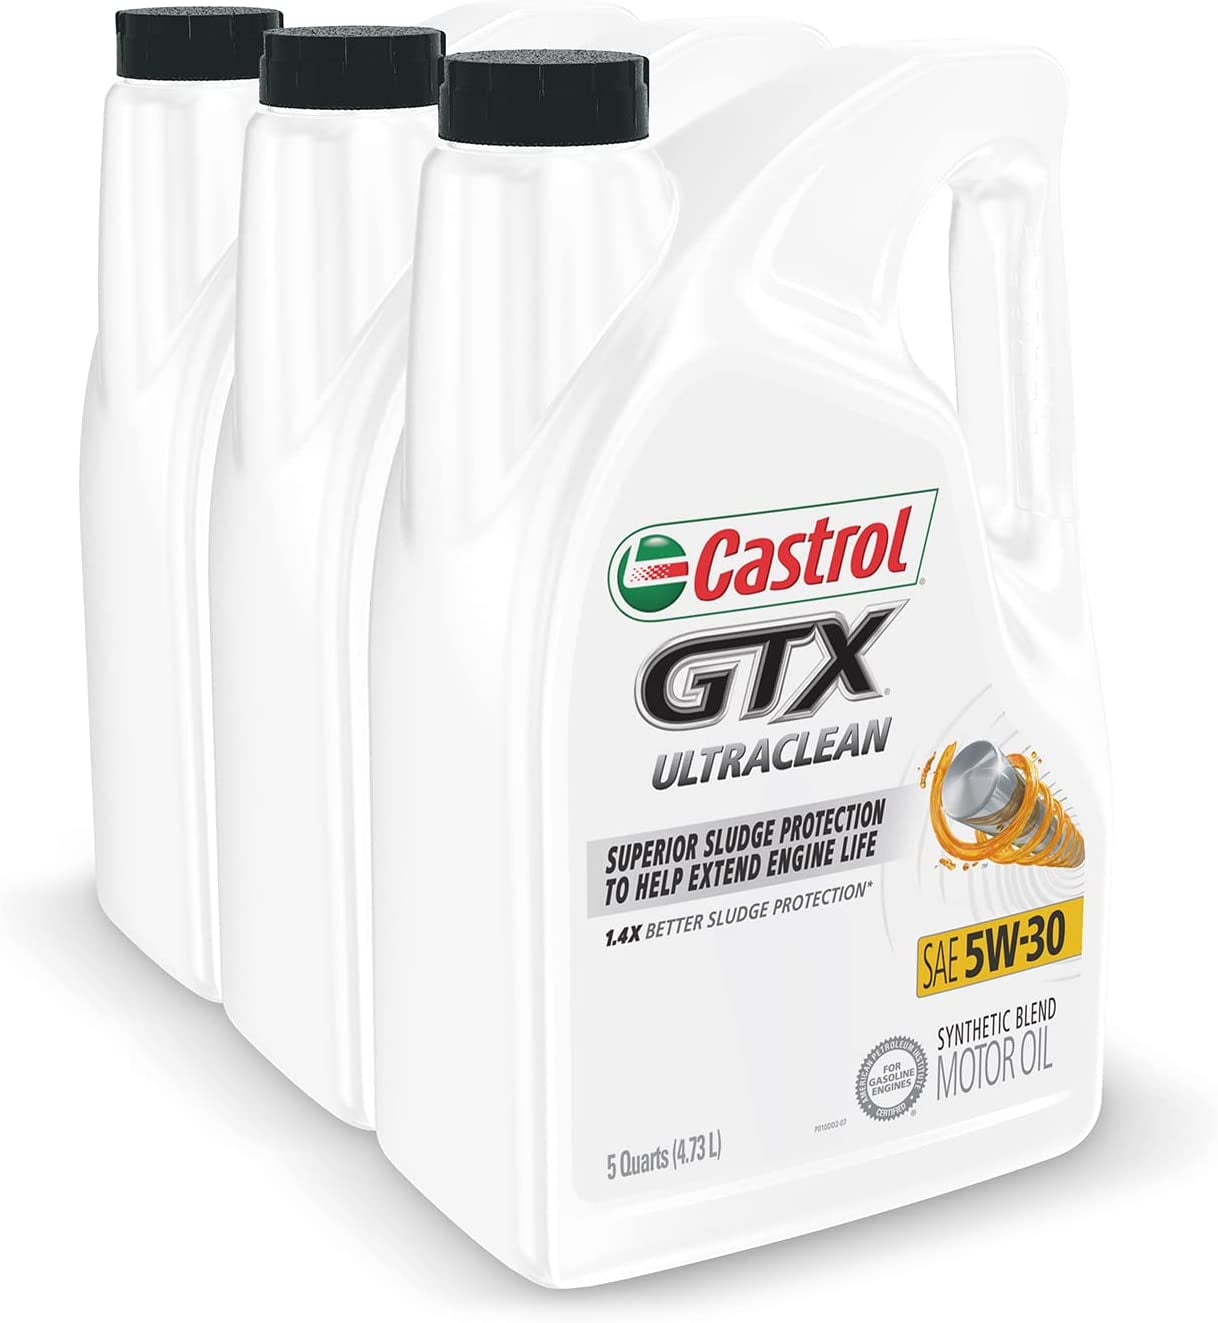 Castrol GTX Ultraclean 5W-30 Synthetic Blend Motor Oil, 5 Quart 